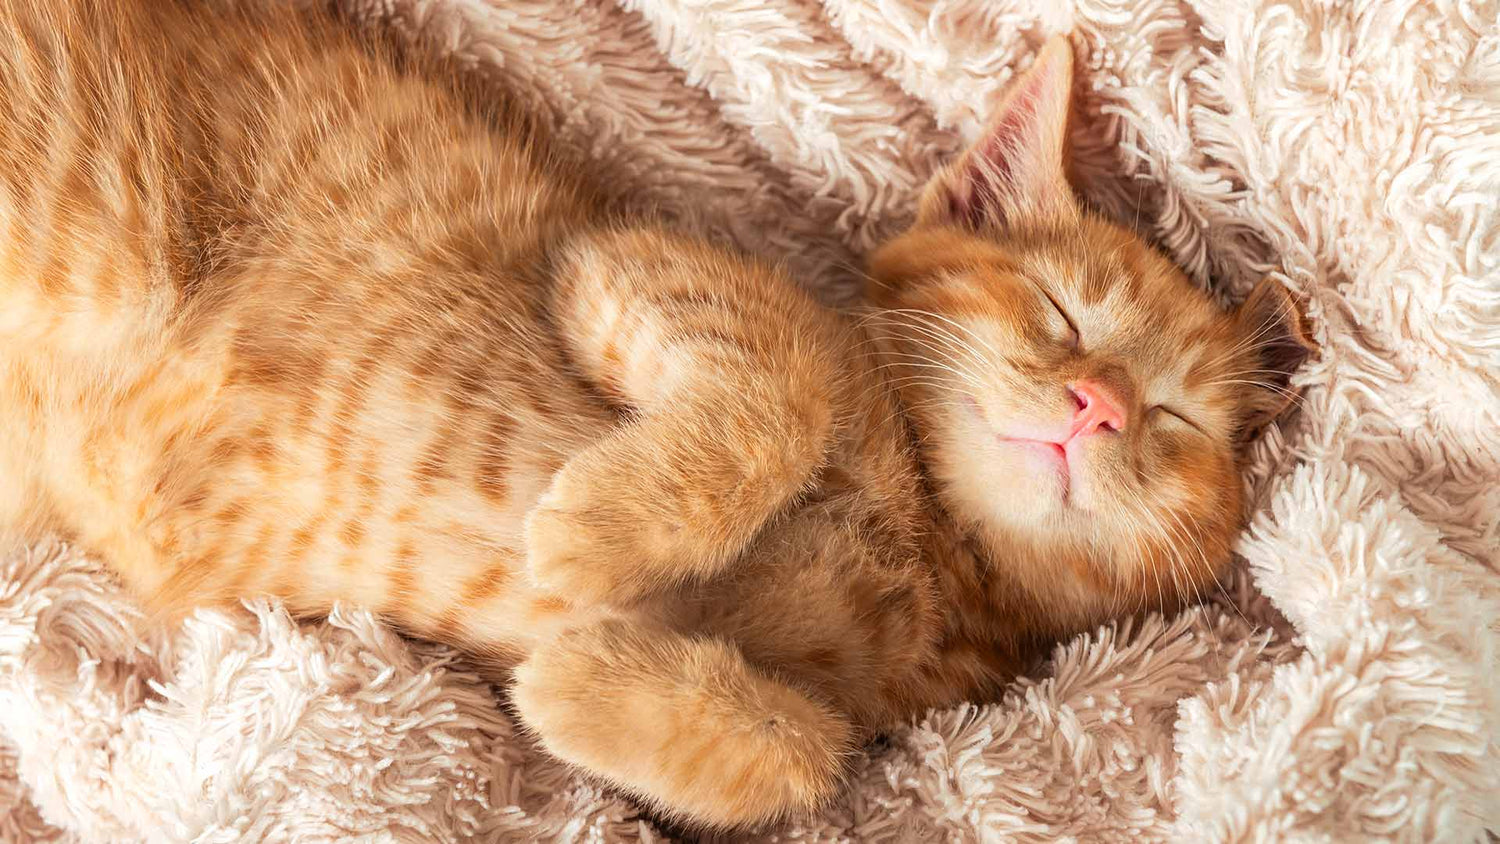 Where Do Cats Prefer to Sleep?